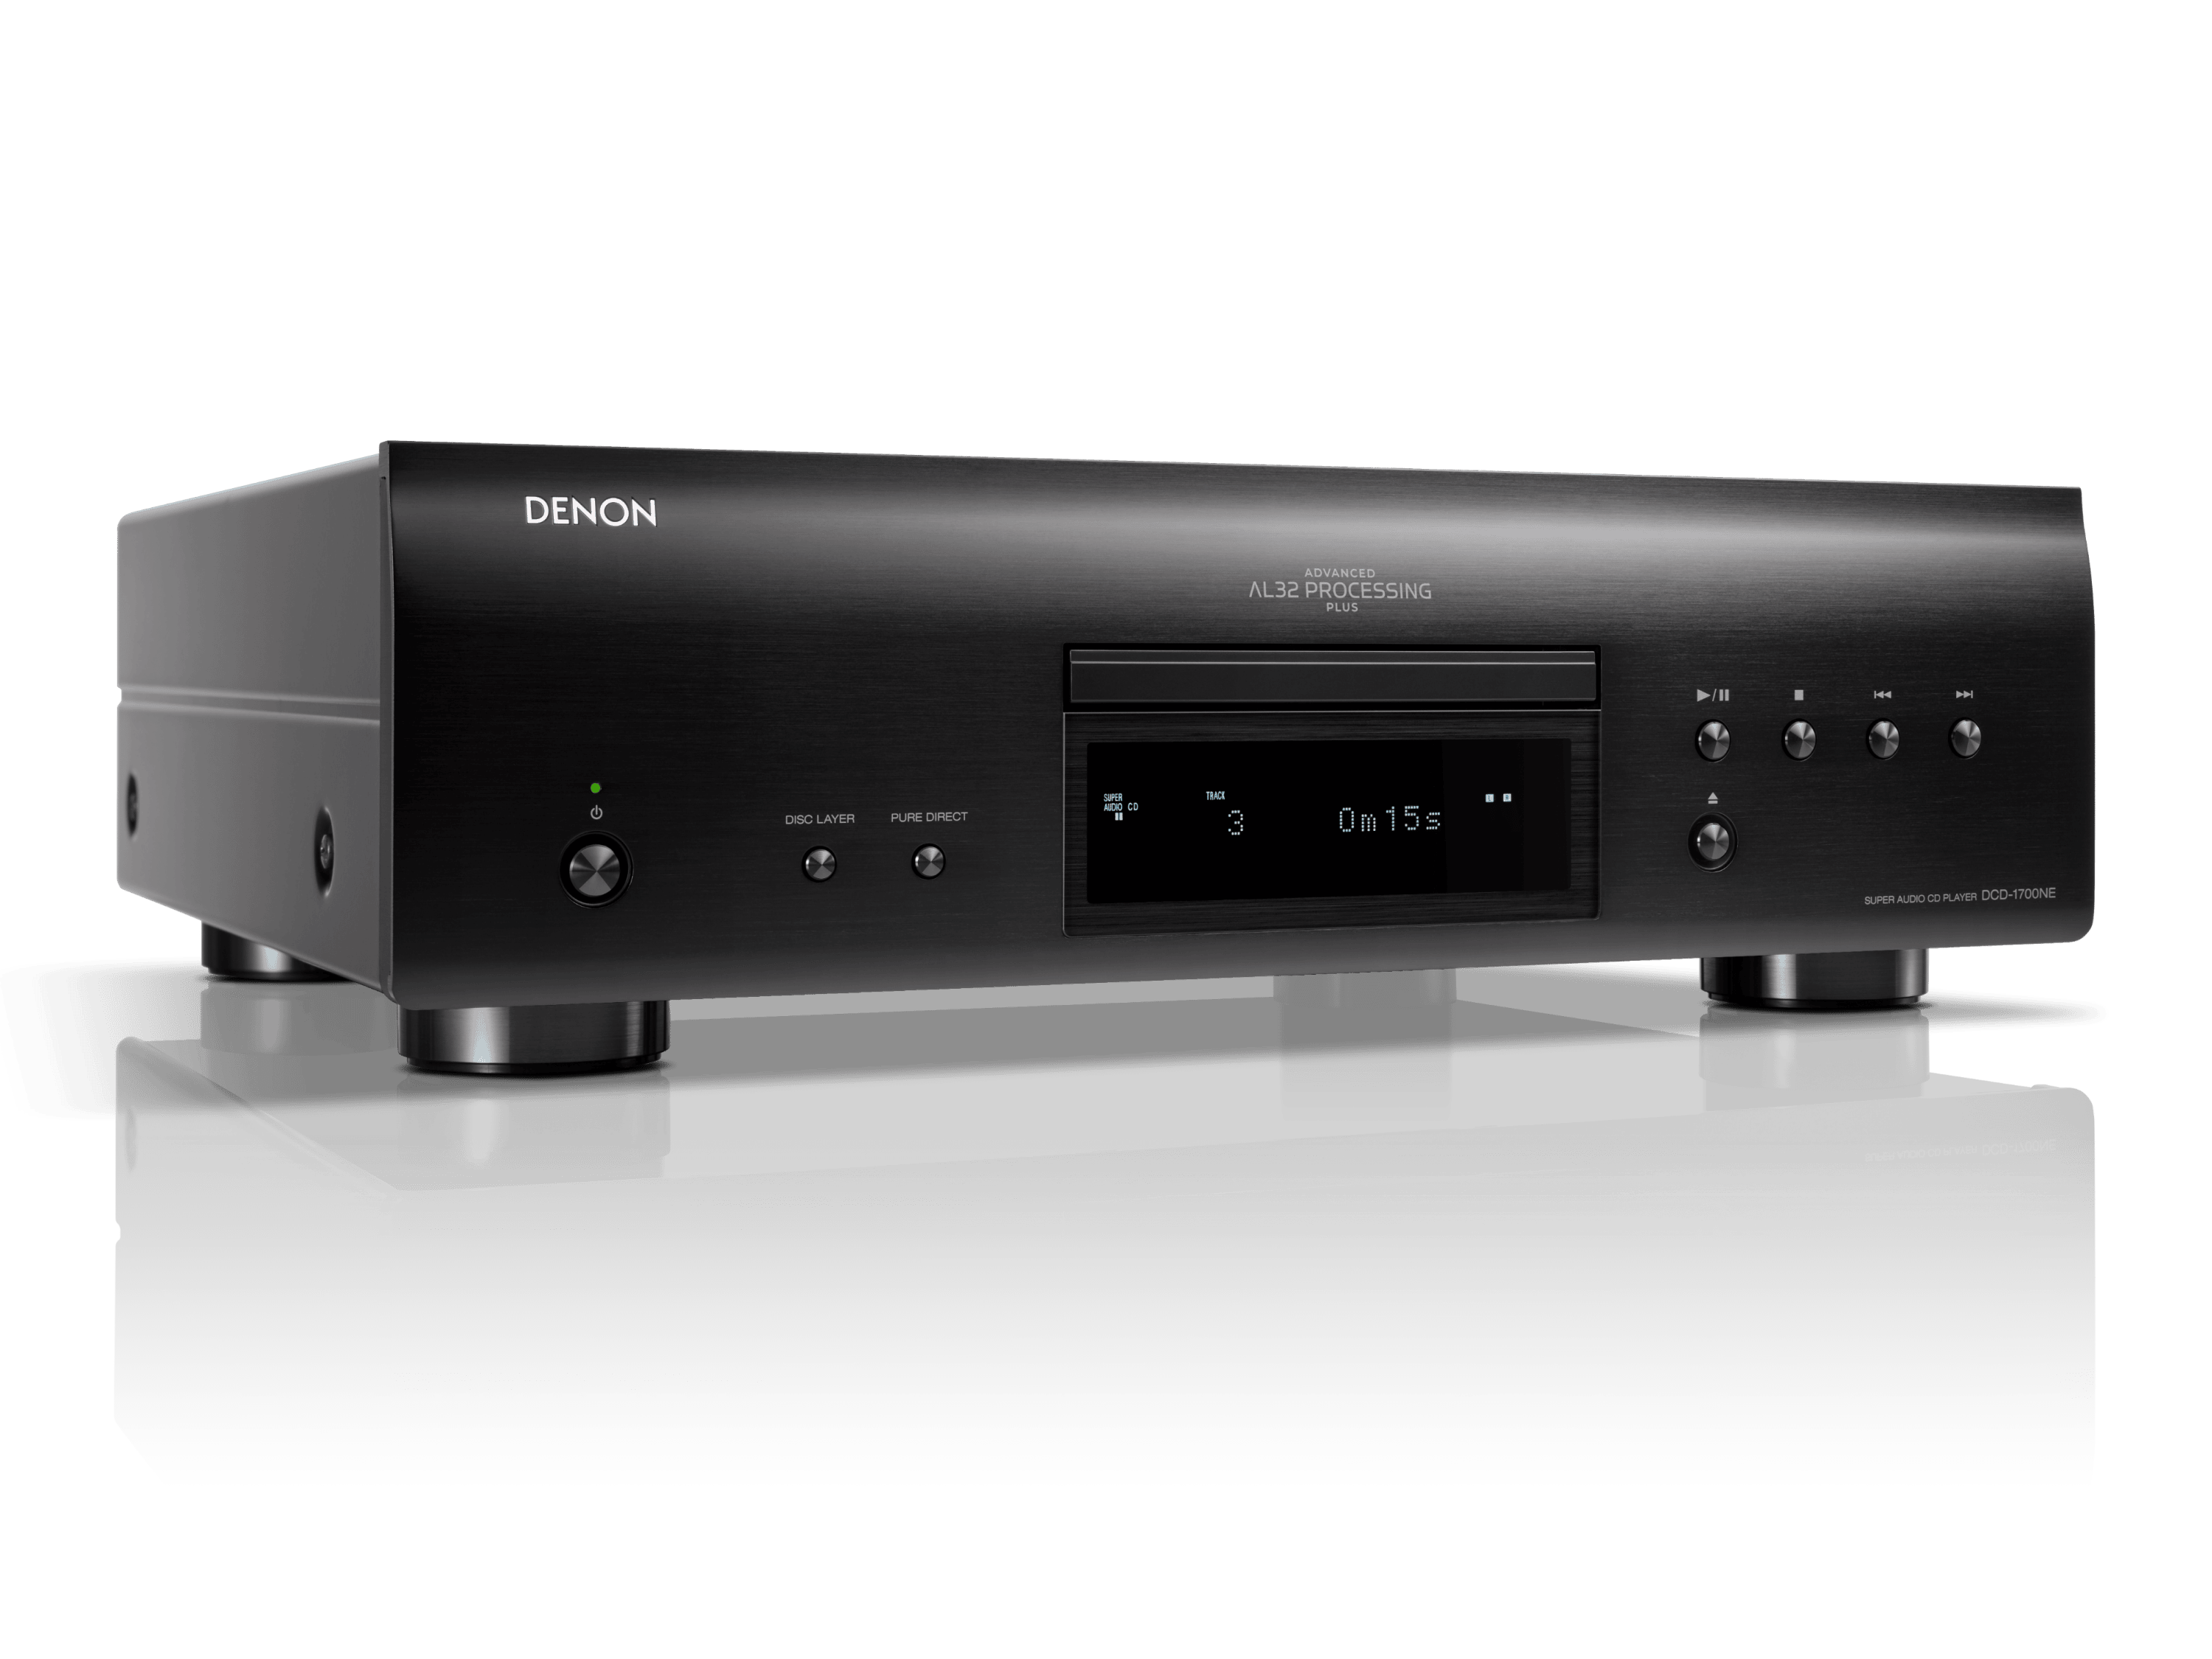 DCD-1700NE - CD/SACD-Player DCD-1700NE Denon Europe AL32 mit Plus - | Processing Advanced